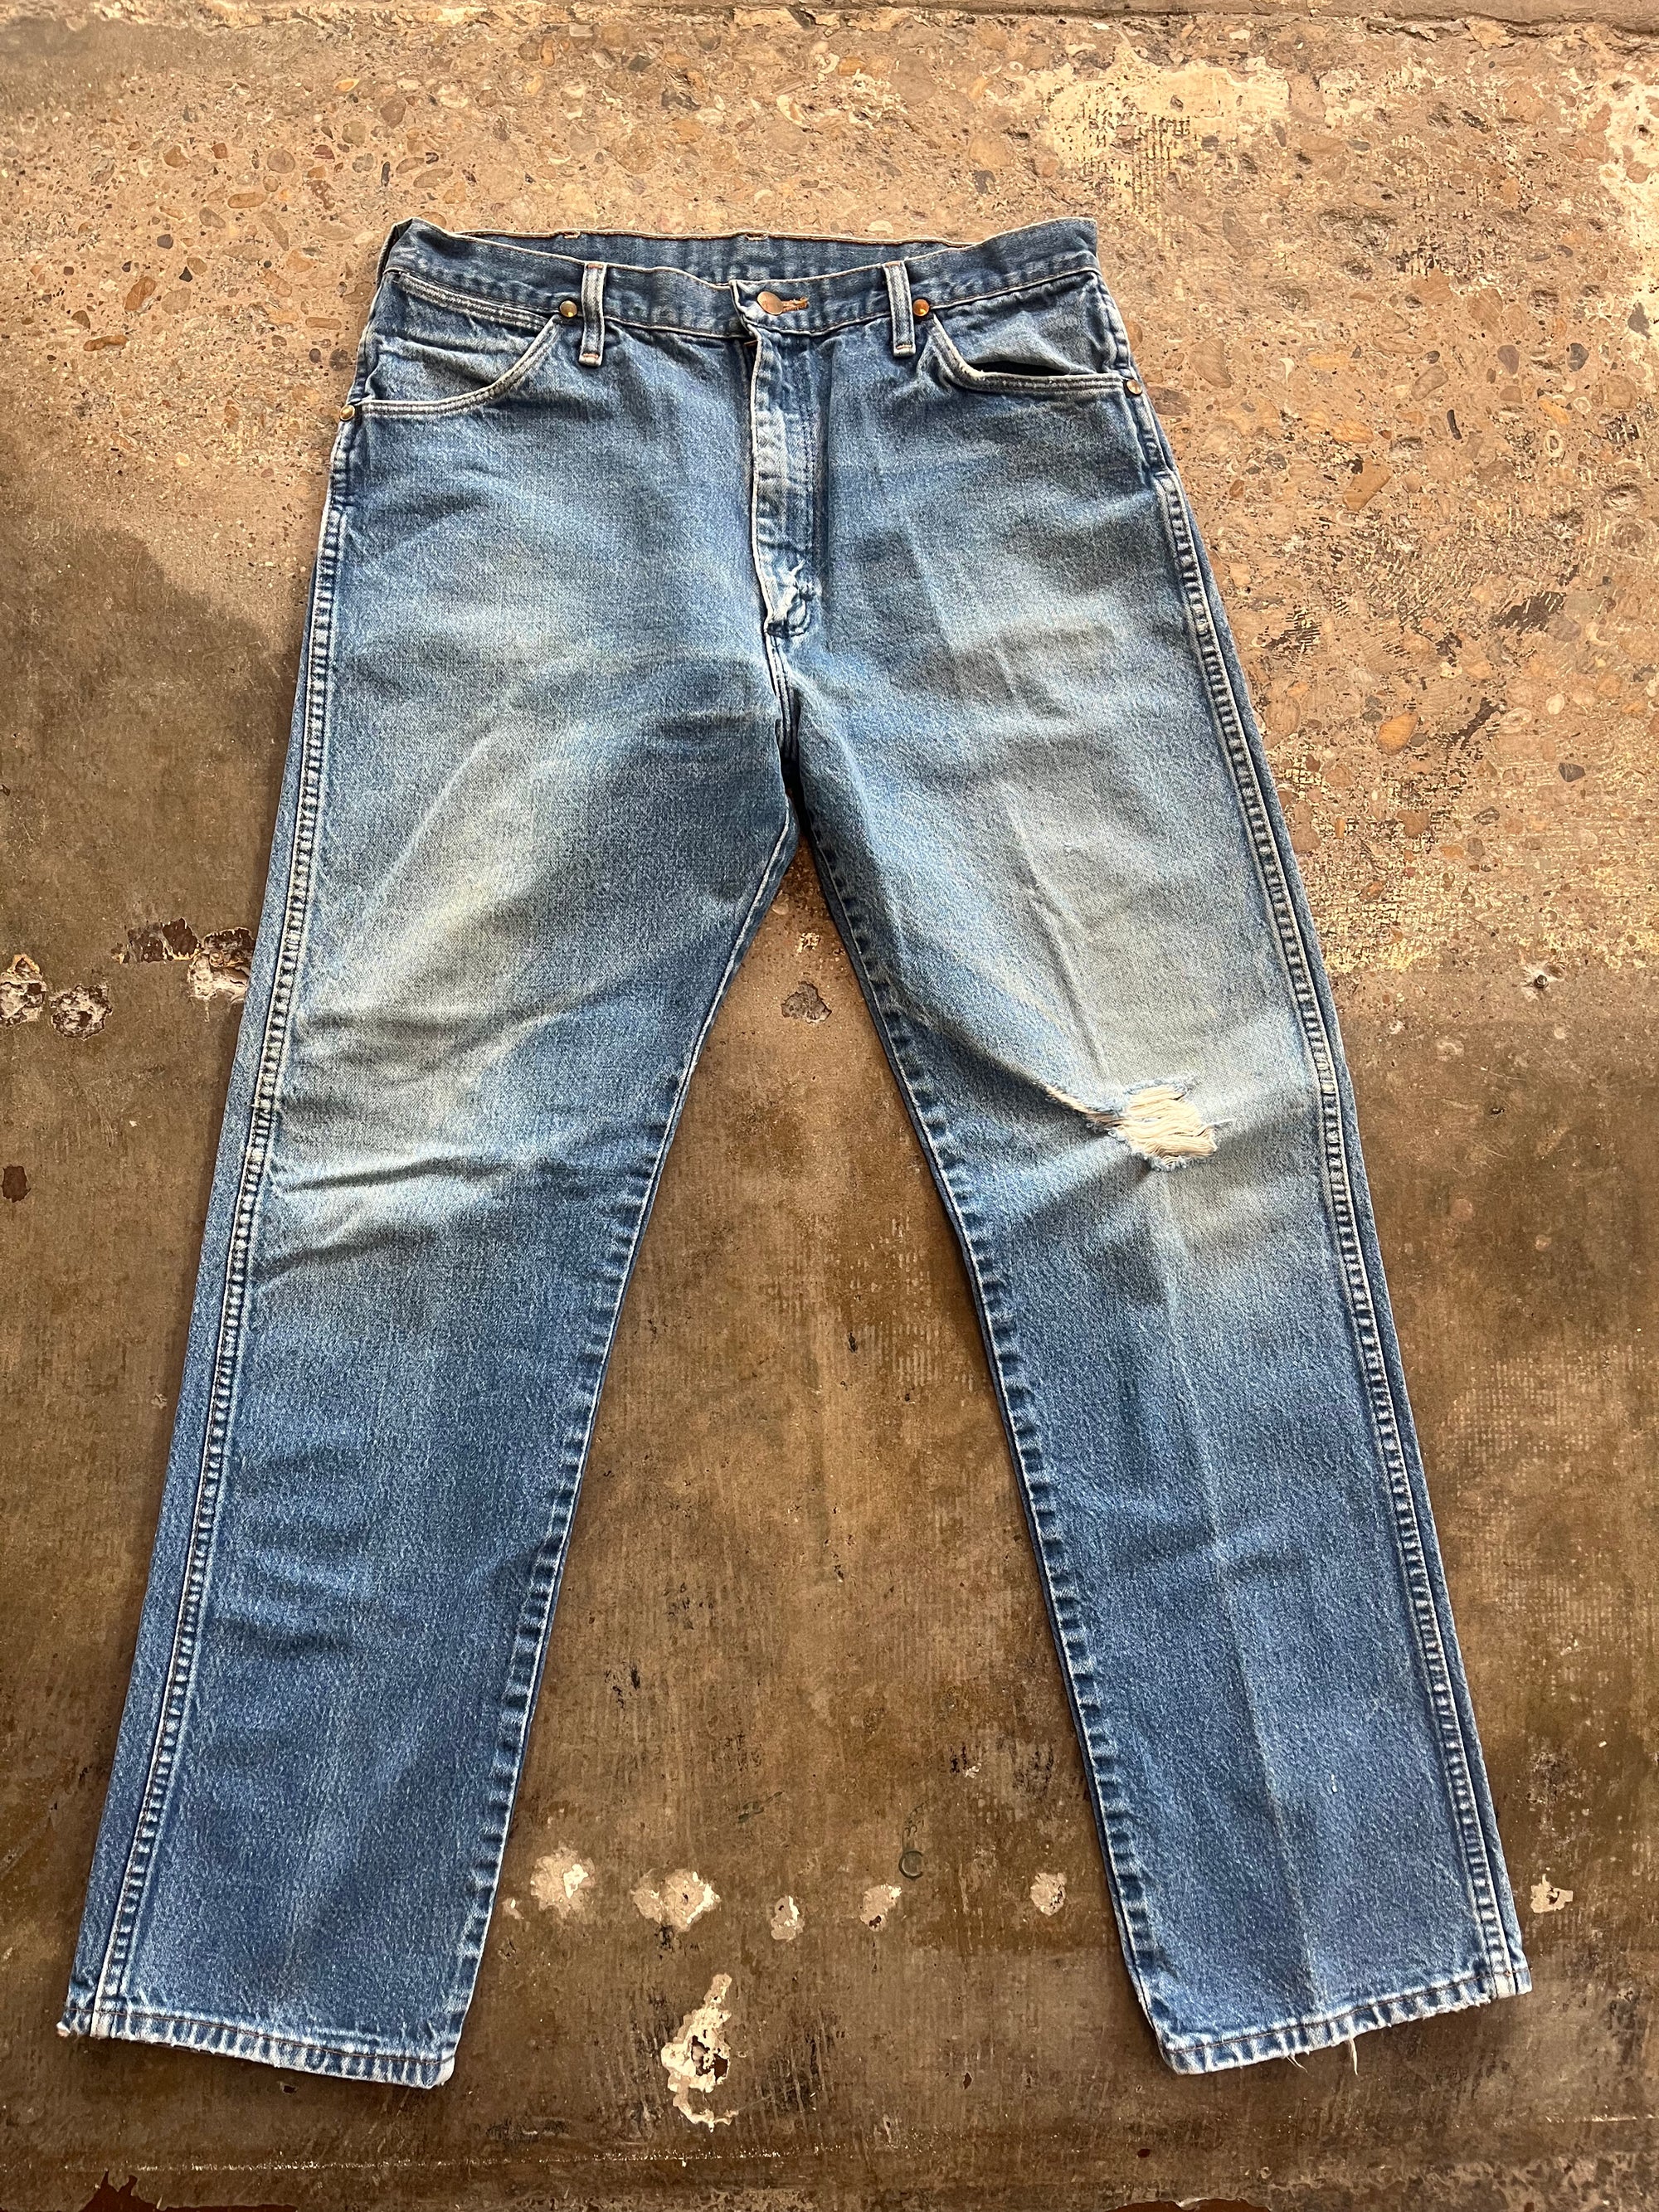 90s Distressed Wrangler Jeans